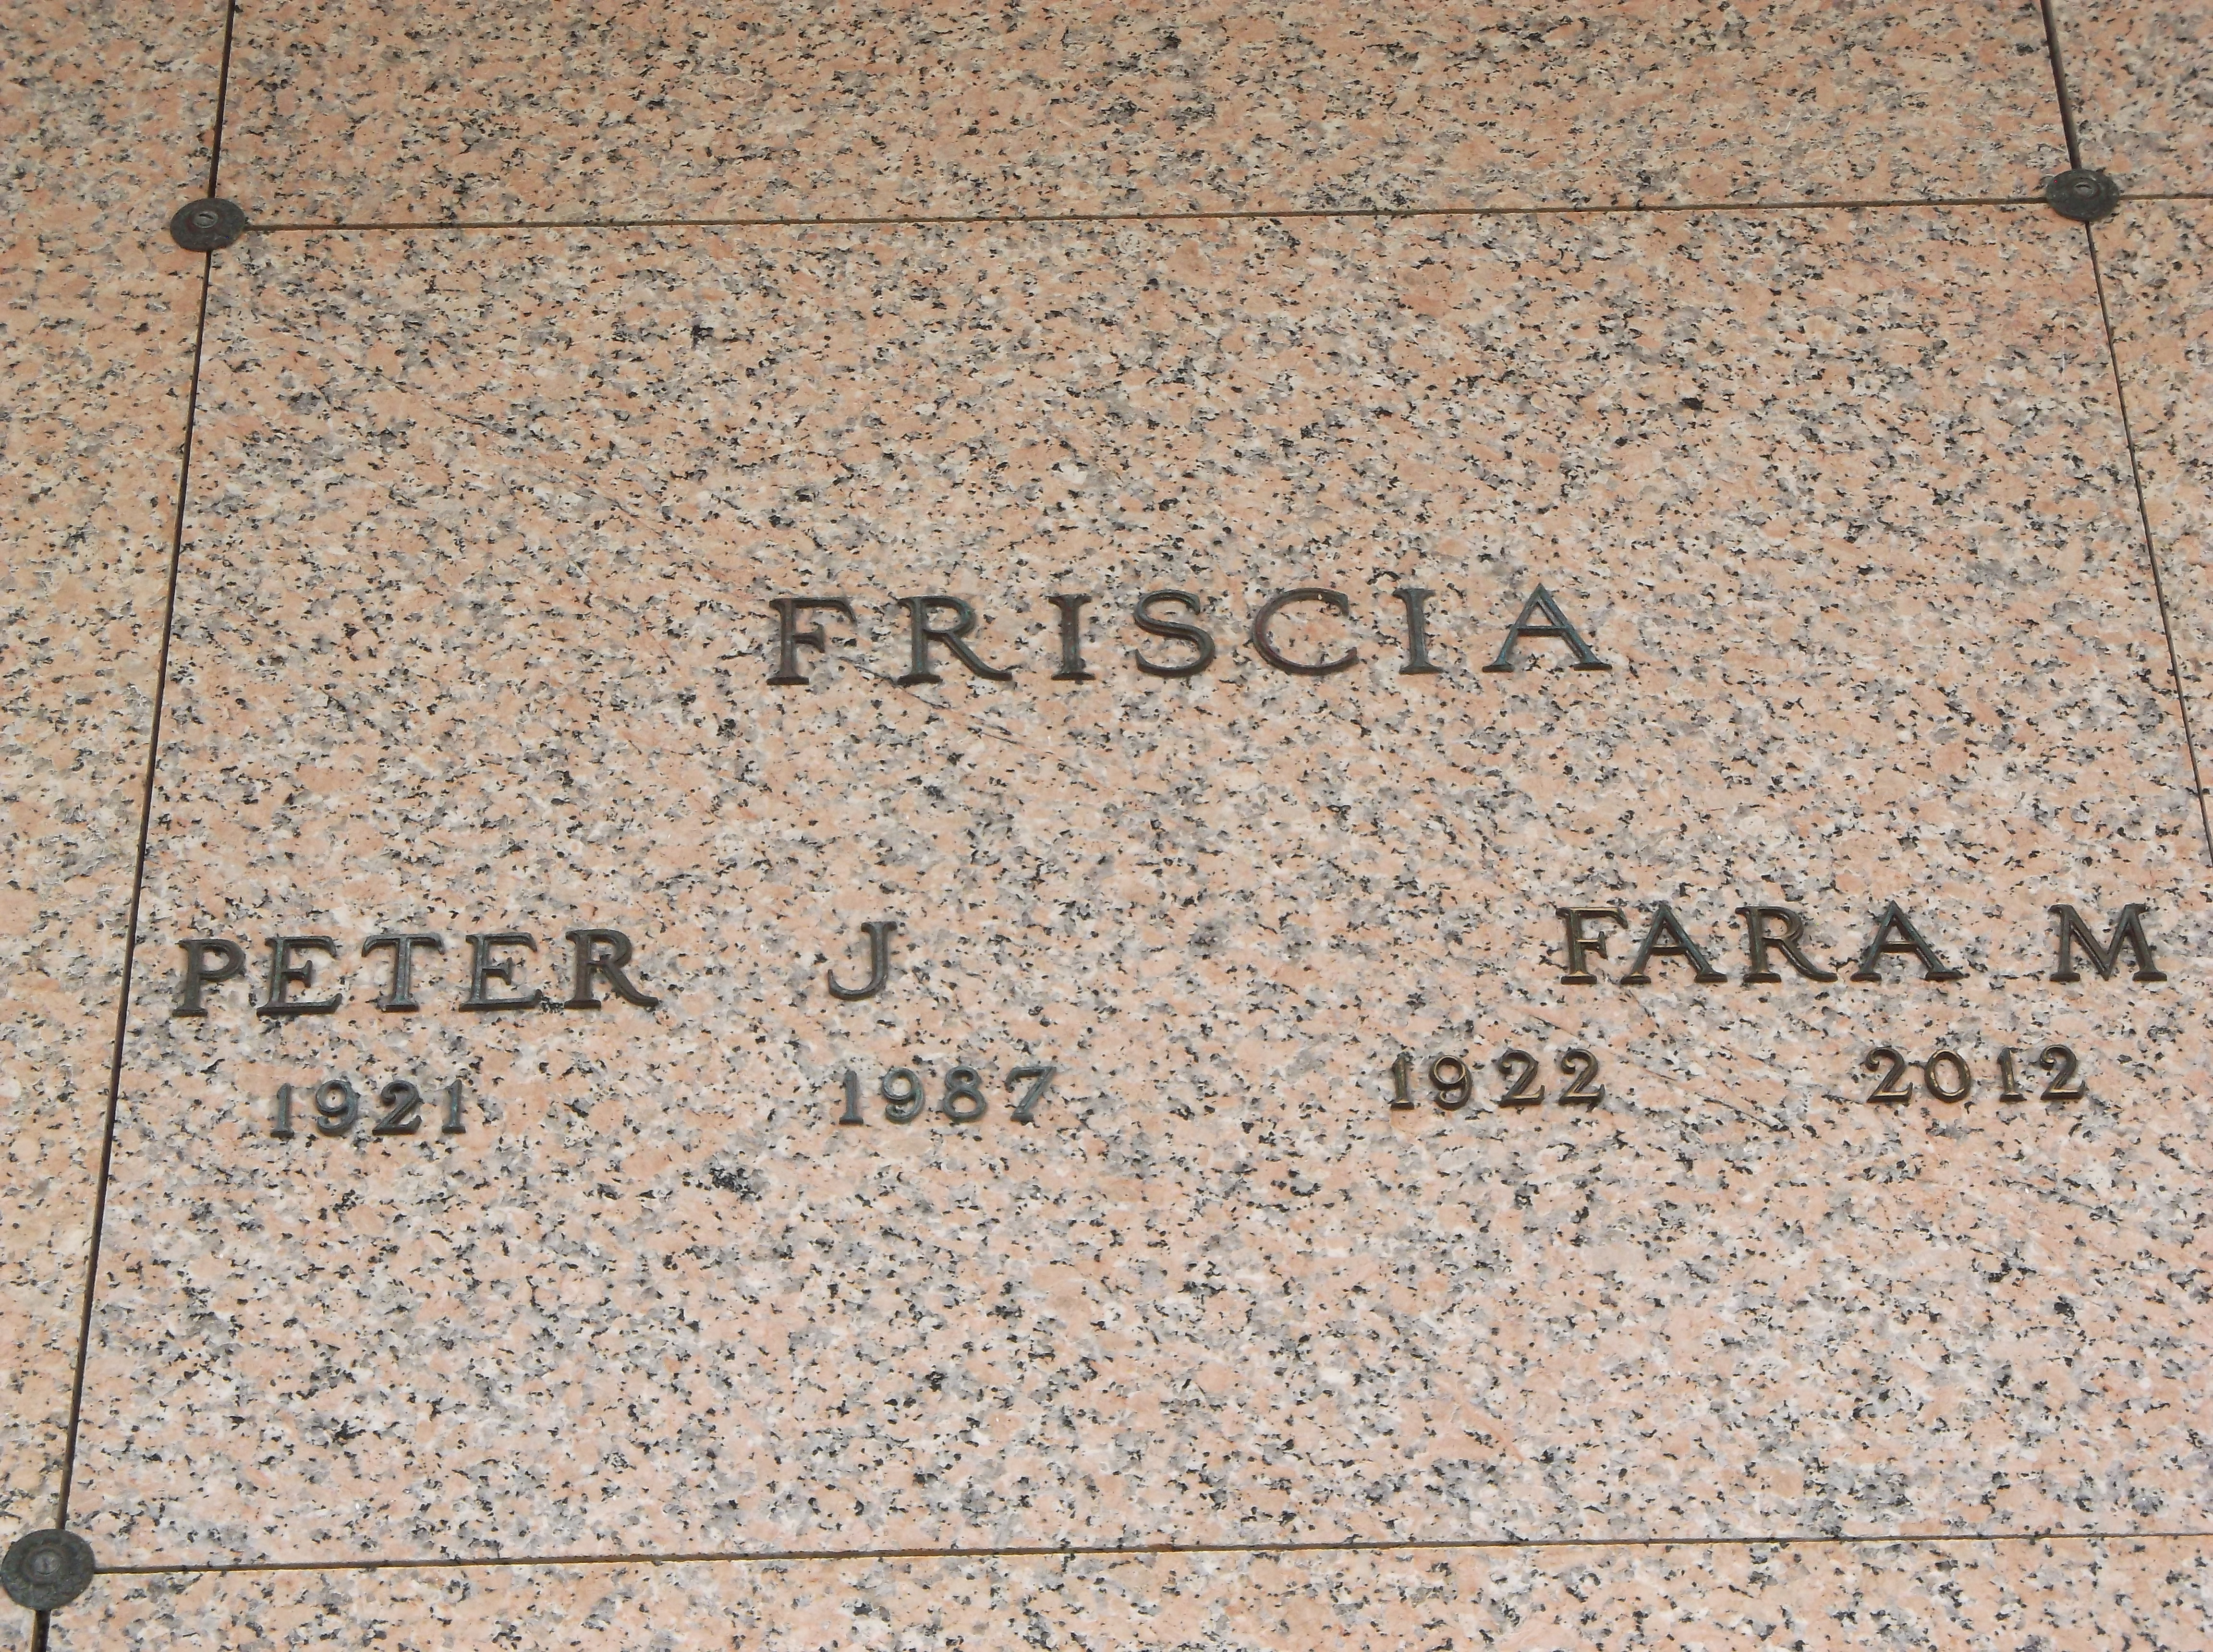 Peter J Friscia